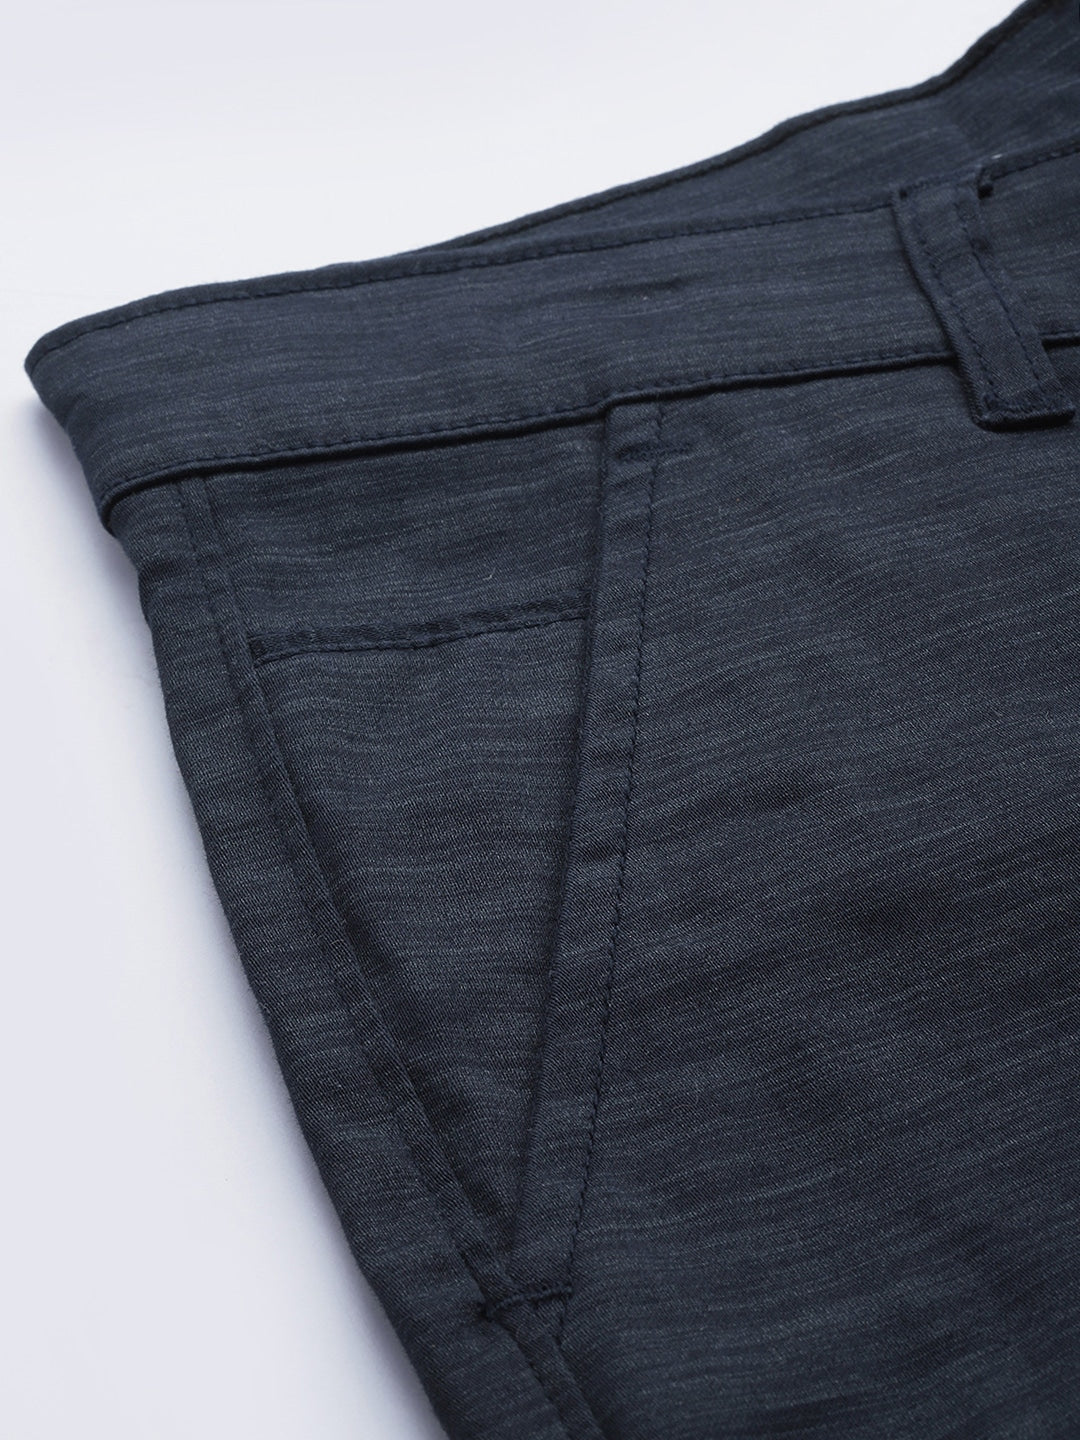 Men Navy Solids Cotton Elastene Slim Fit Formal Trouser